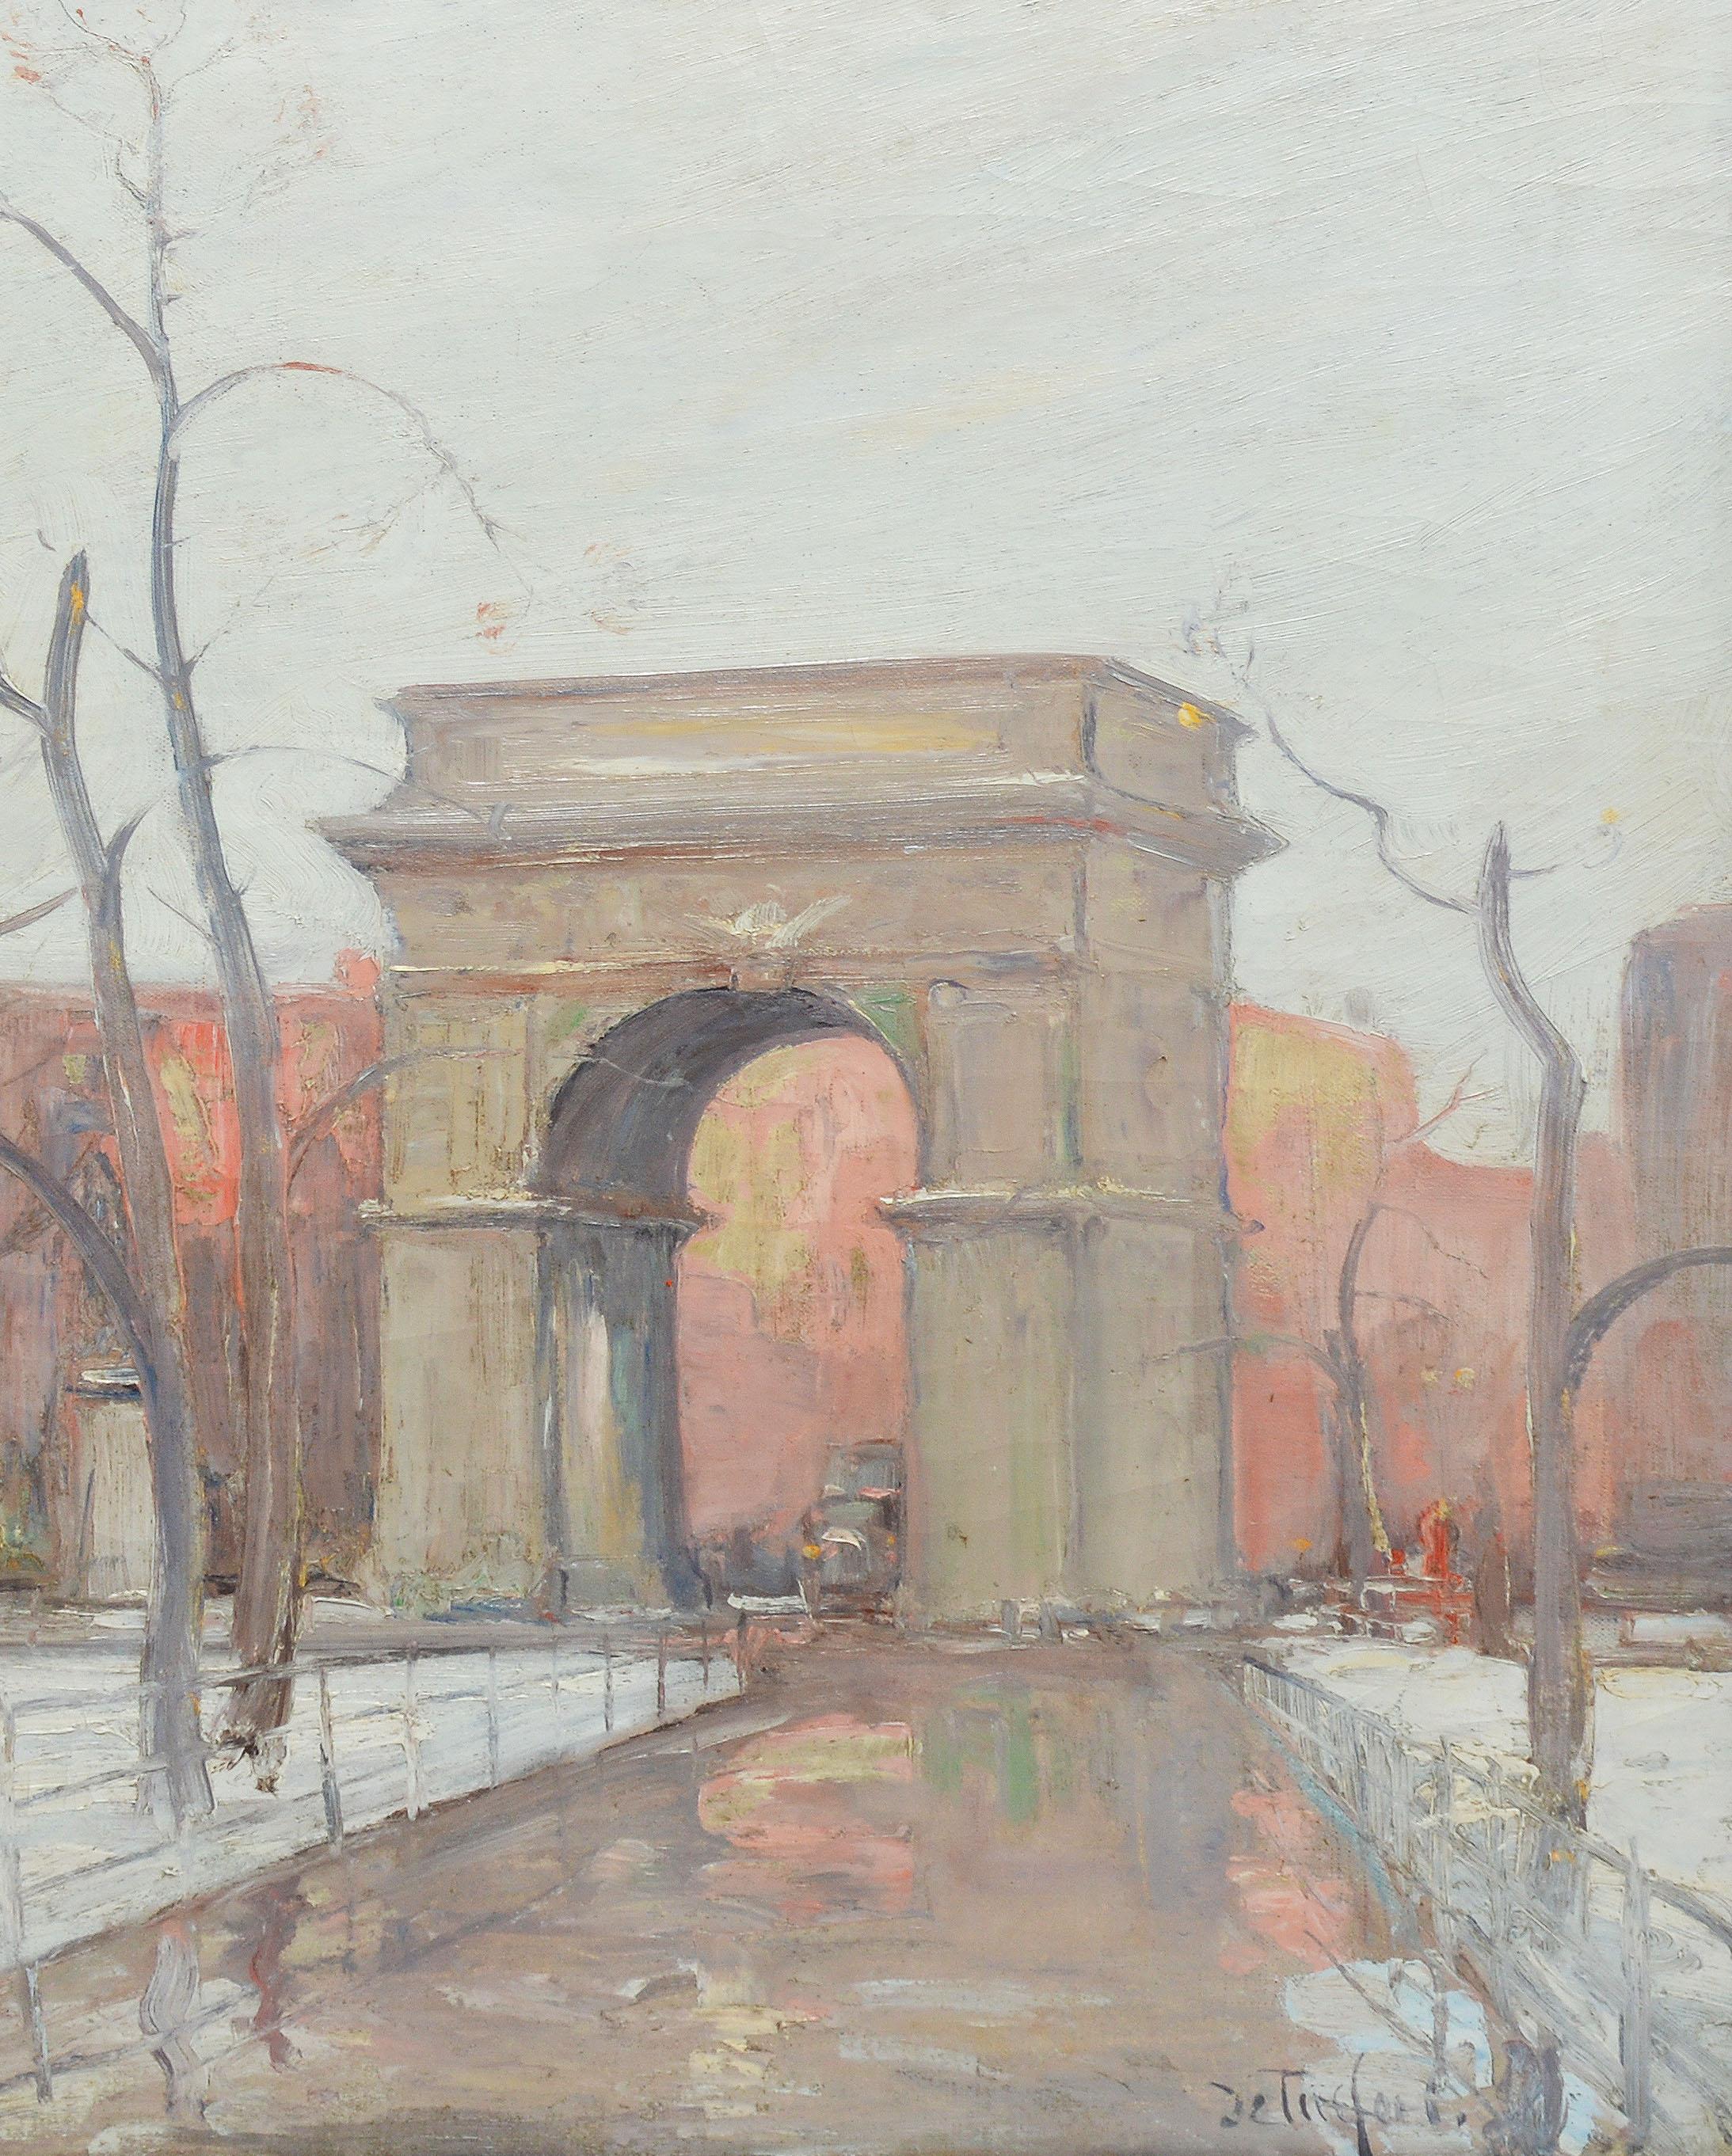 Winter in Washington Square Park, New York Cityscape Painting by Bela DeTirefort 4